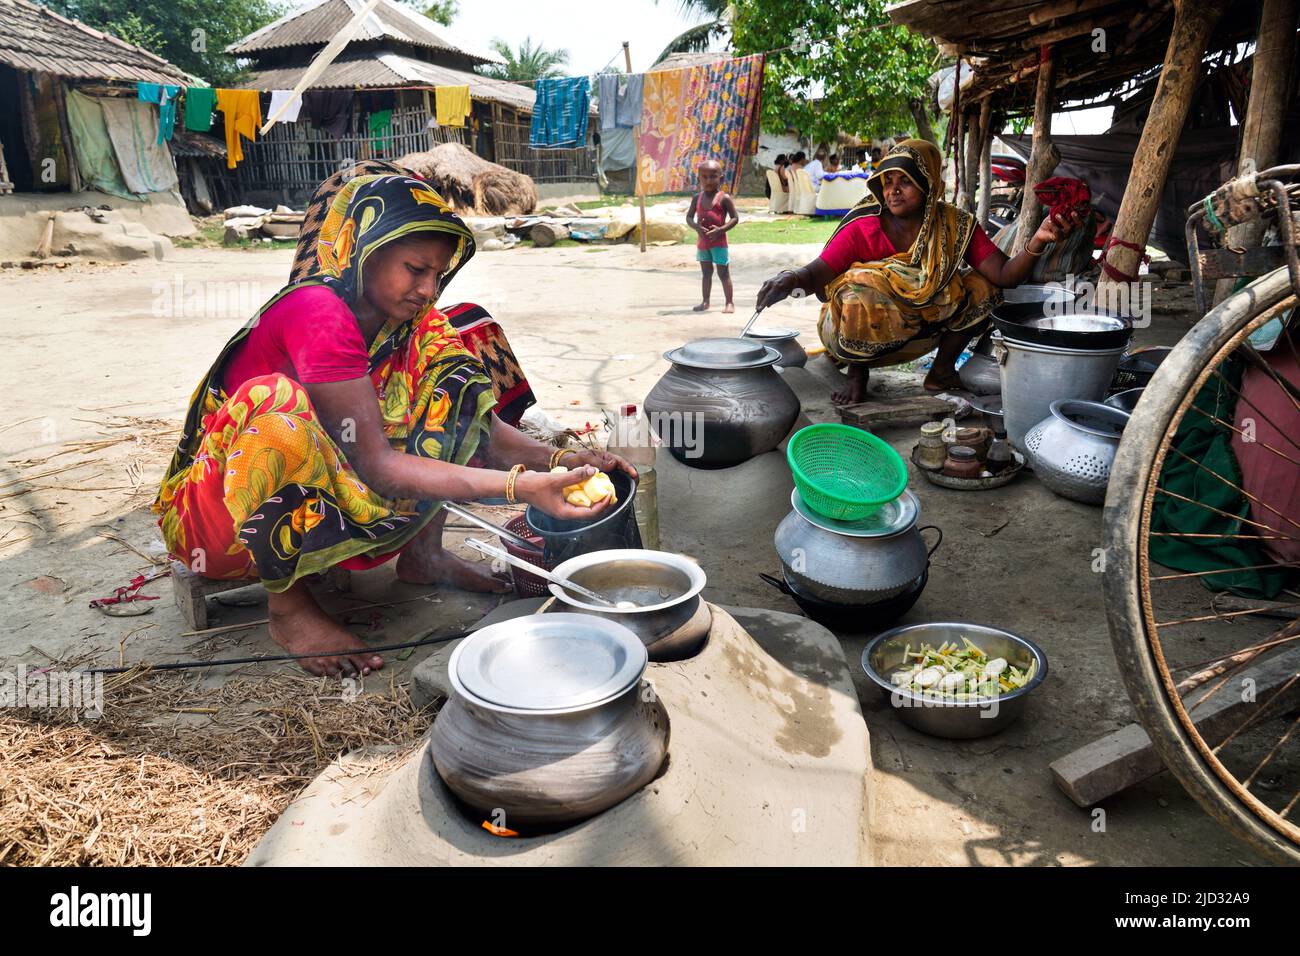 Cooking area with firewood in the village of Baluijhake/Dhosa near Kolkata, India Stock Photo